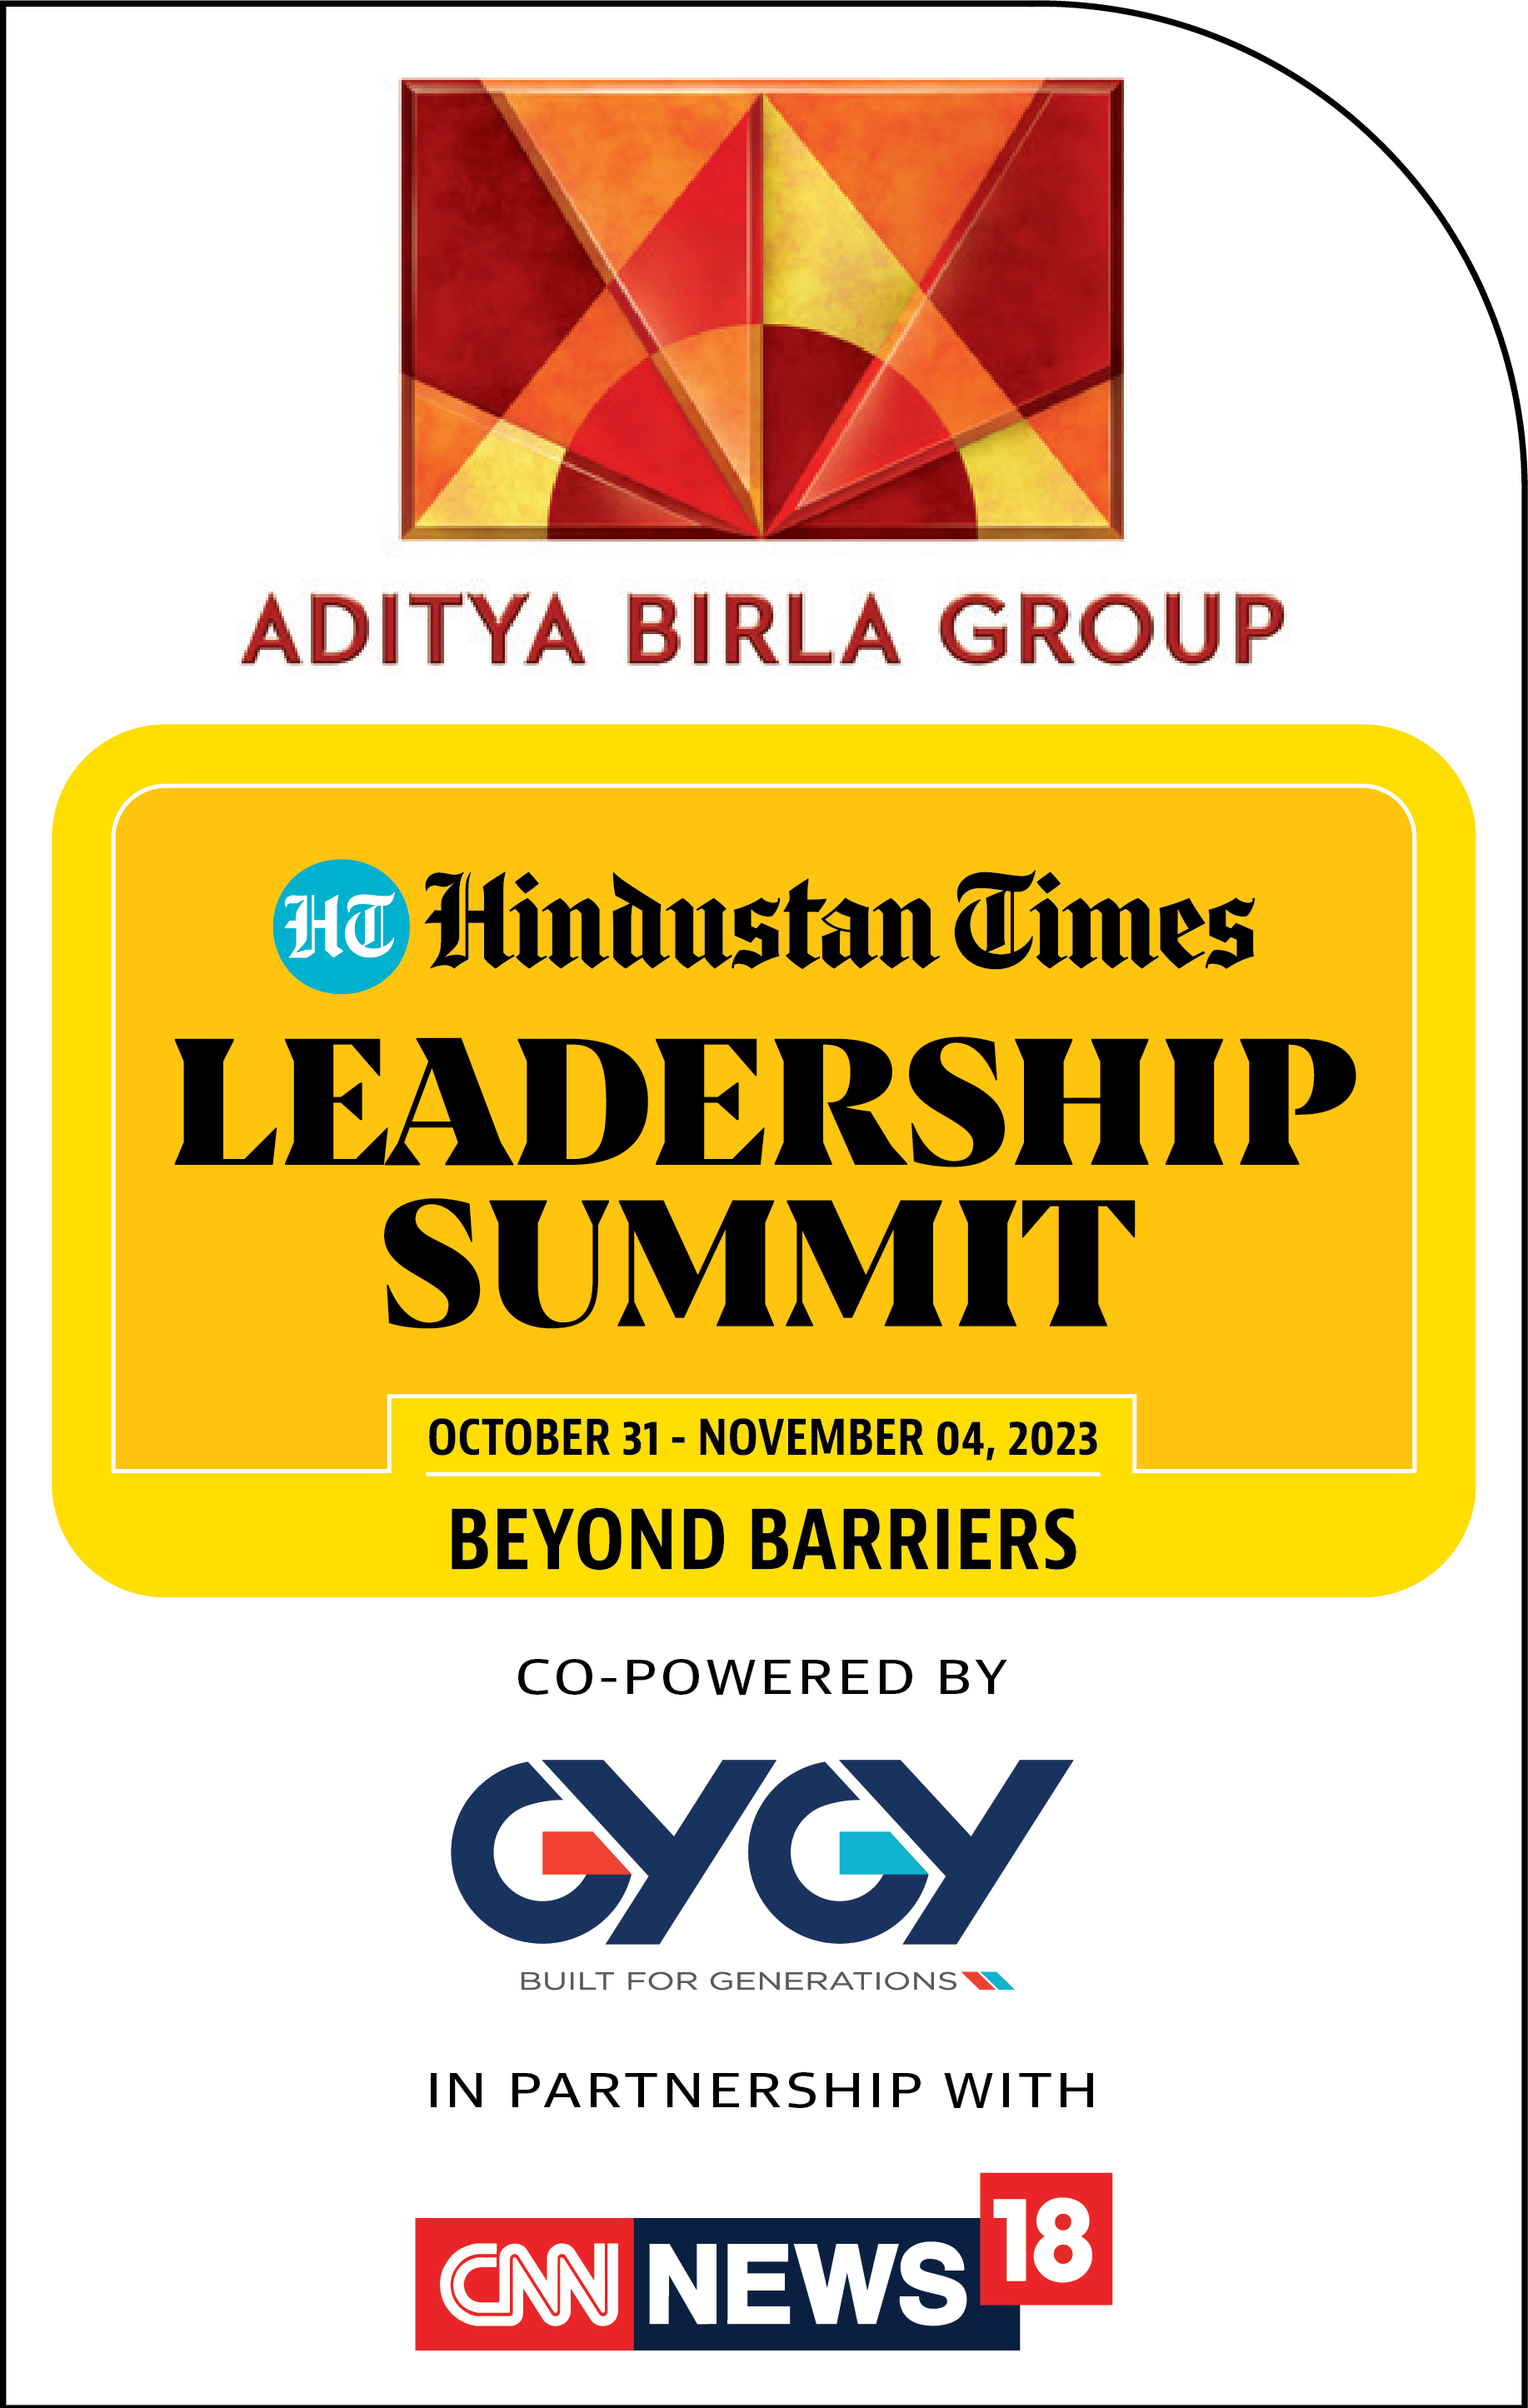 HTLS 2023 Hindustan Times Leadership Summit 21st edition. Get all the